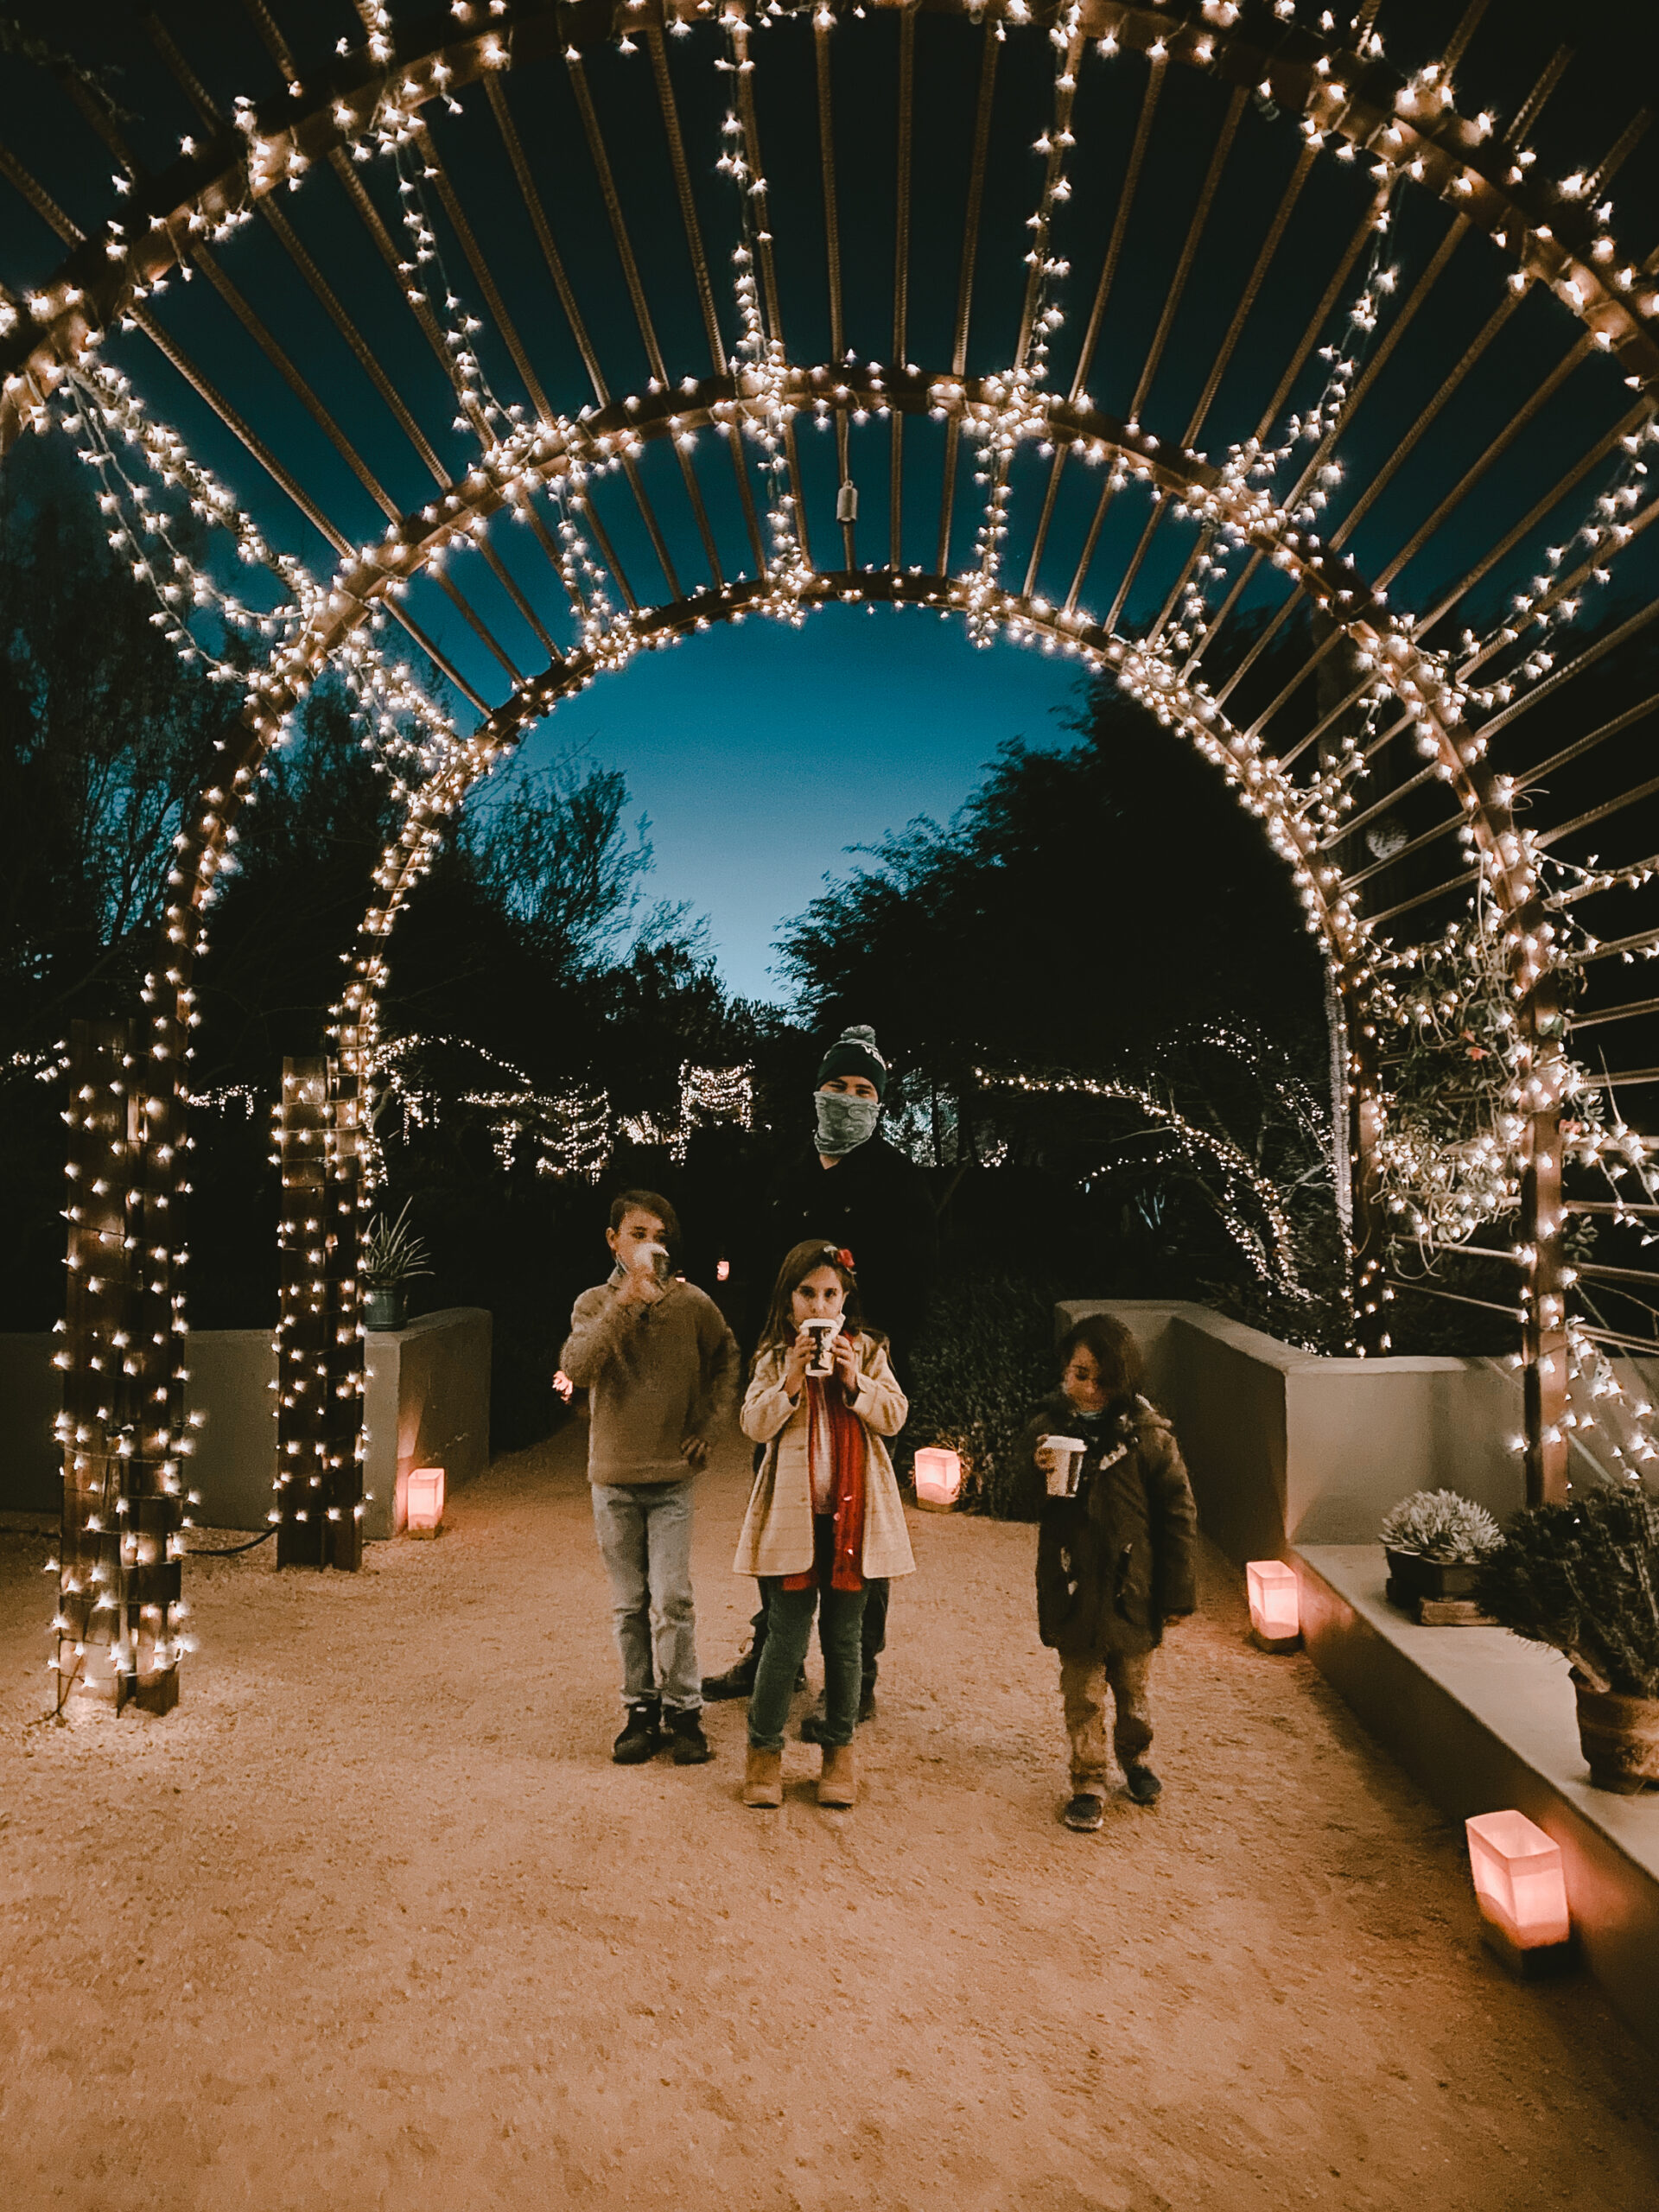 holiday lights and luminarias at the desert botanical gardens in phoenix, arizona #holidayfun #holidaysinphoenix #familyactivities